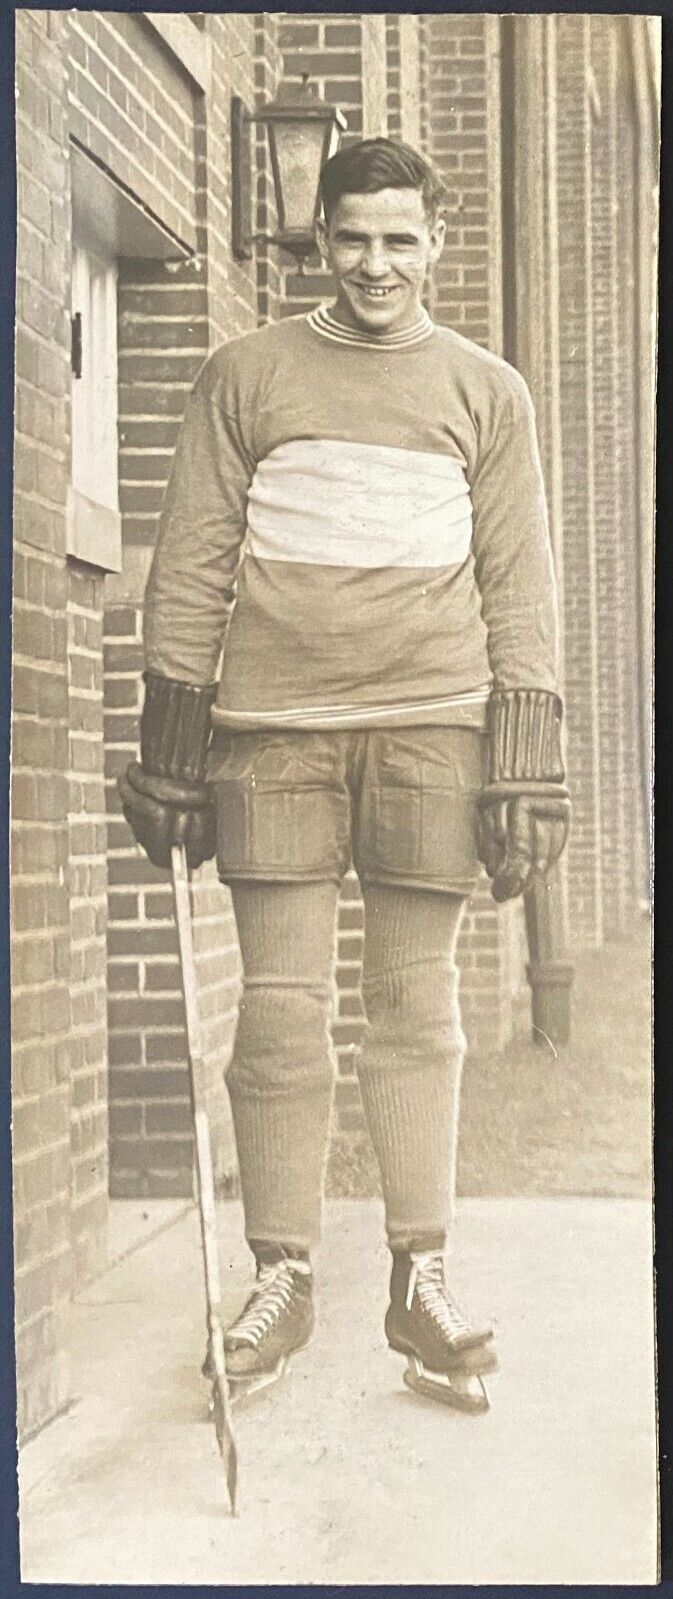 1920s Vintage Type 1 Hockey Player Photo Stamped Toronto Photographer HH Menzie